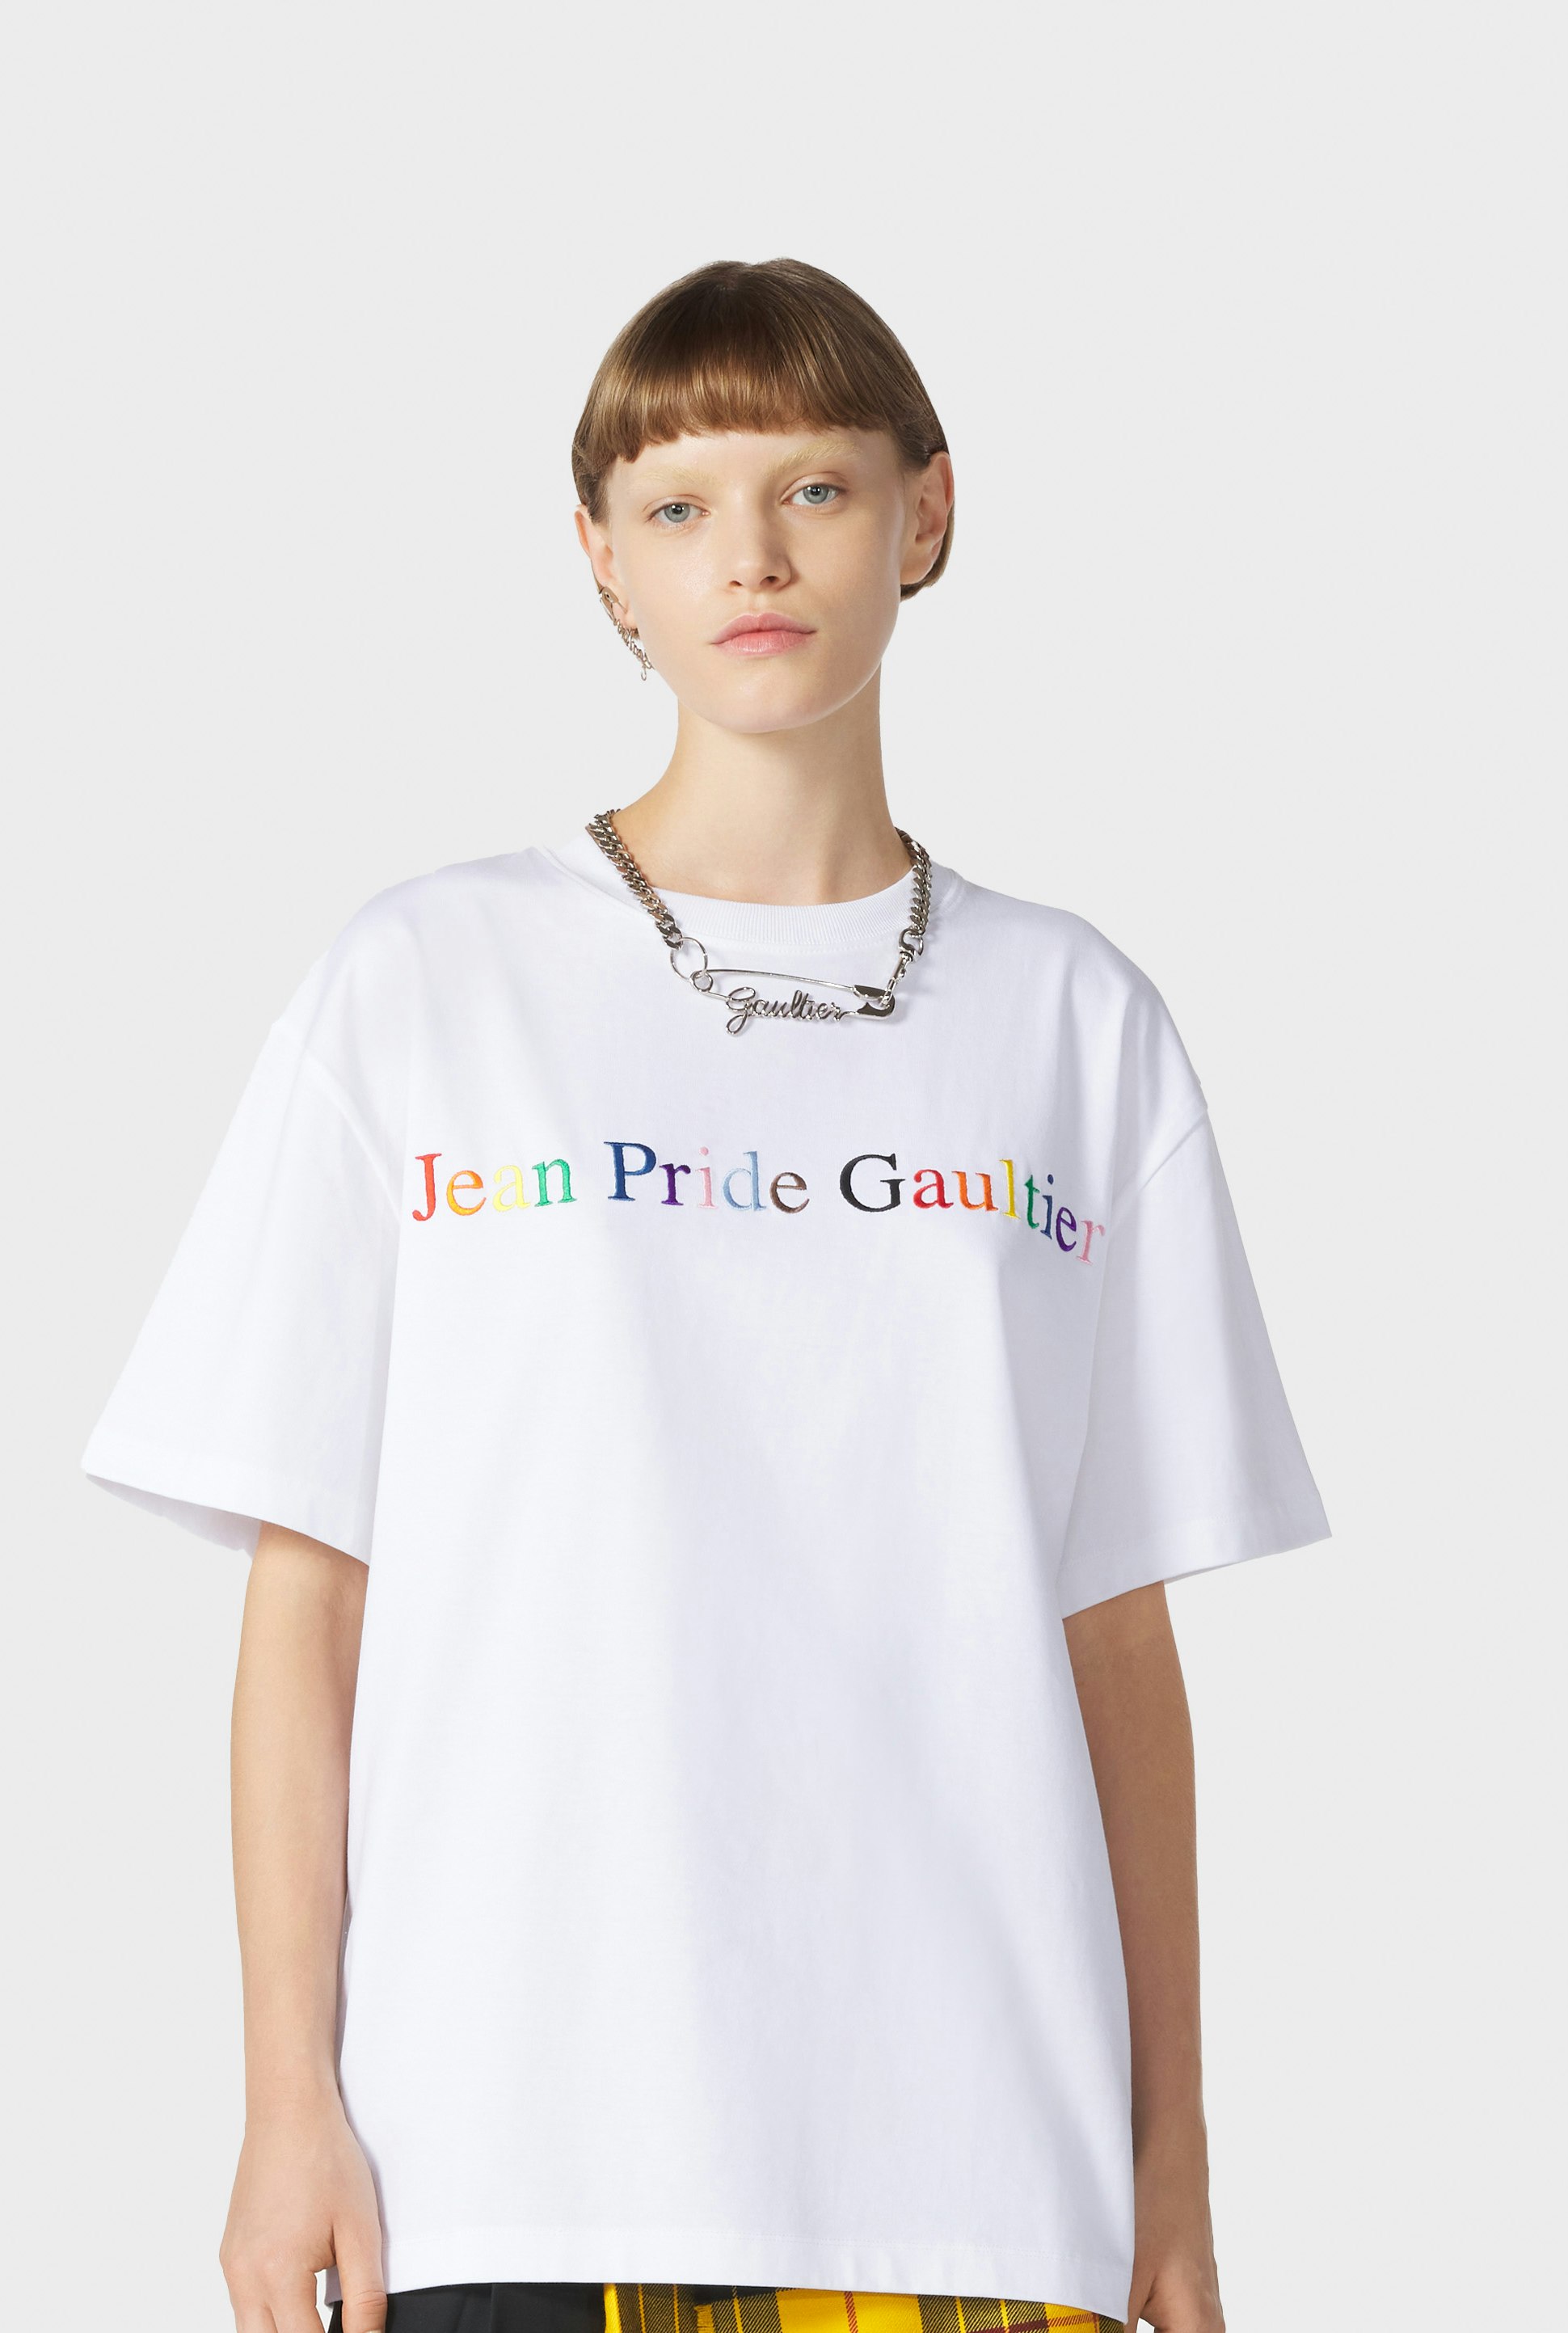 Pride - The Jean Pride Gaultier T-Shirt Jean Paul Gaultier